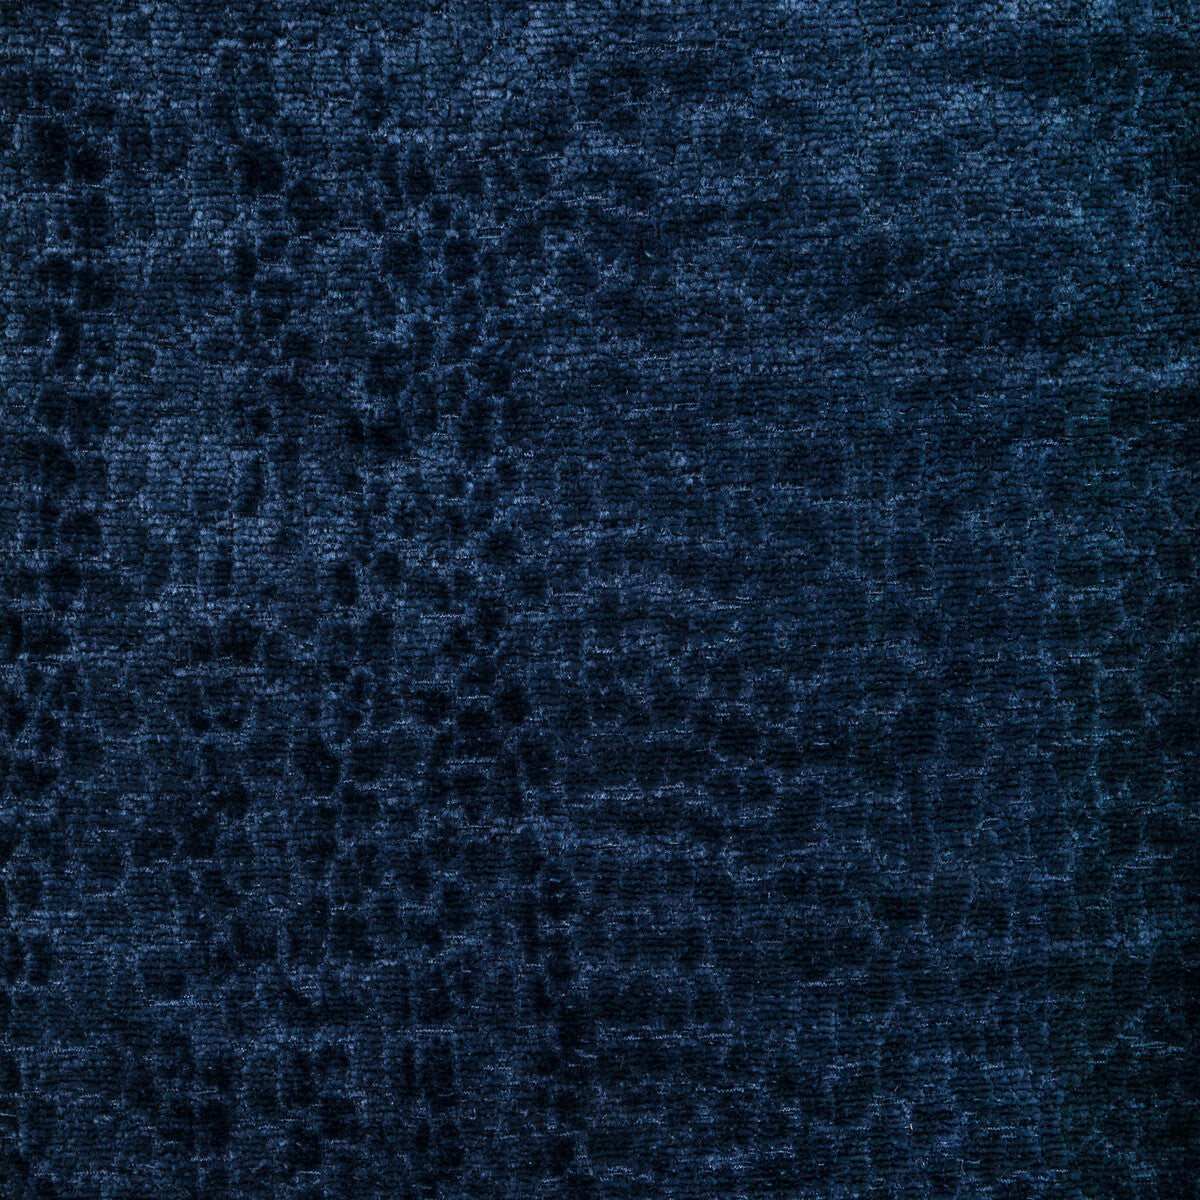 Kravet Smart fabric in 36606-50 color - pattern 36606.50.0 - by Kravet Smart in the Performance Kravetarmor collection